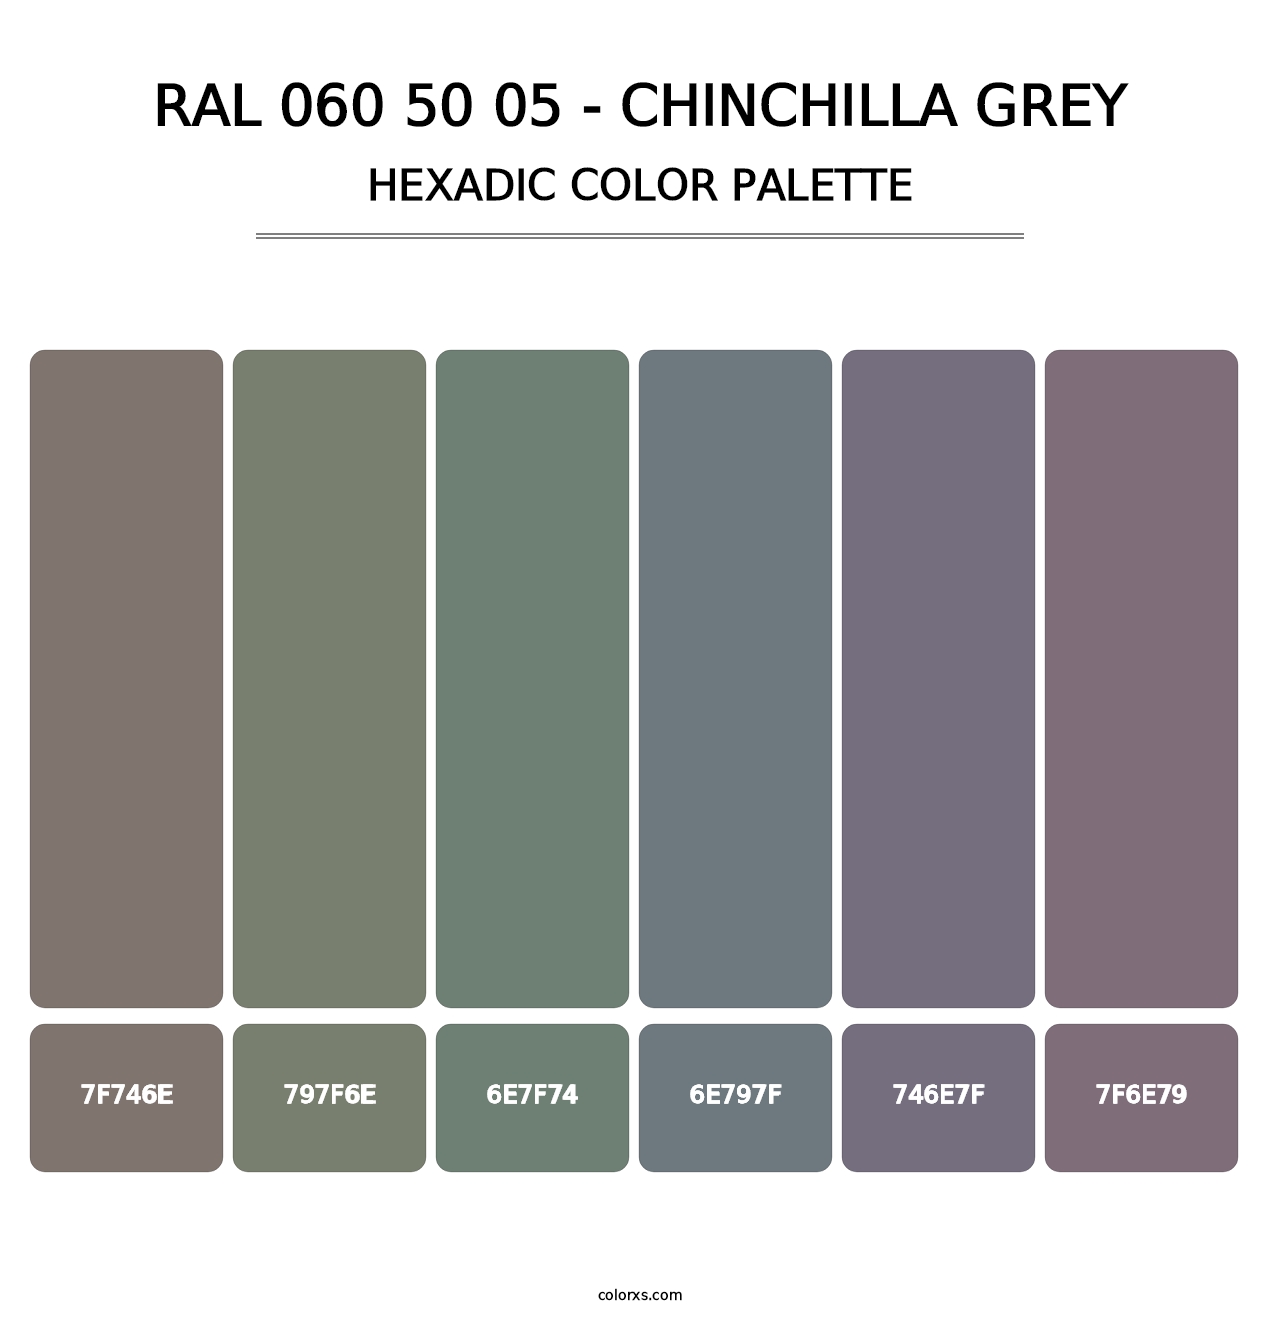 RAL 060 50 05 - Chinchilla Grey - Hexadic Color Palette